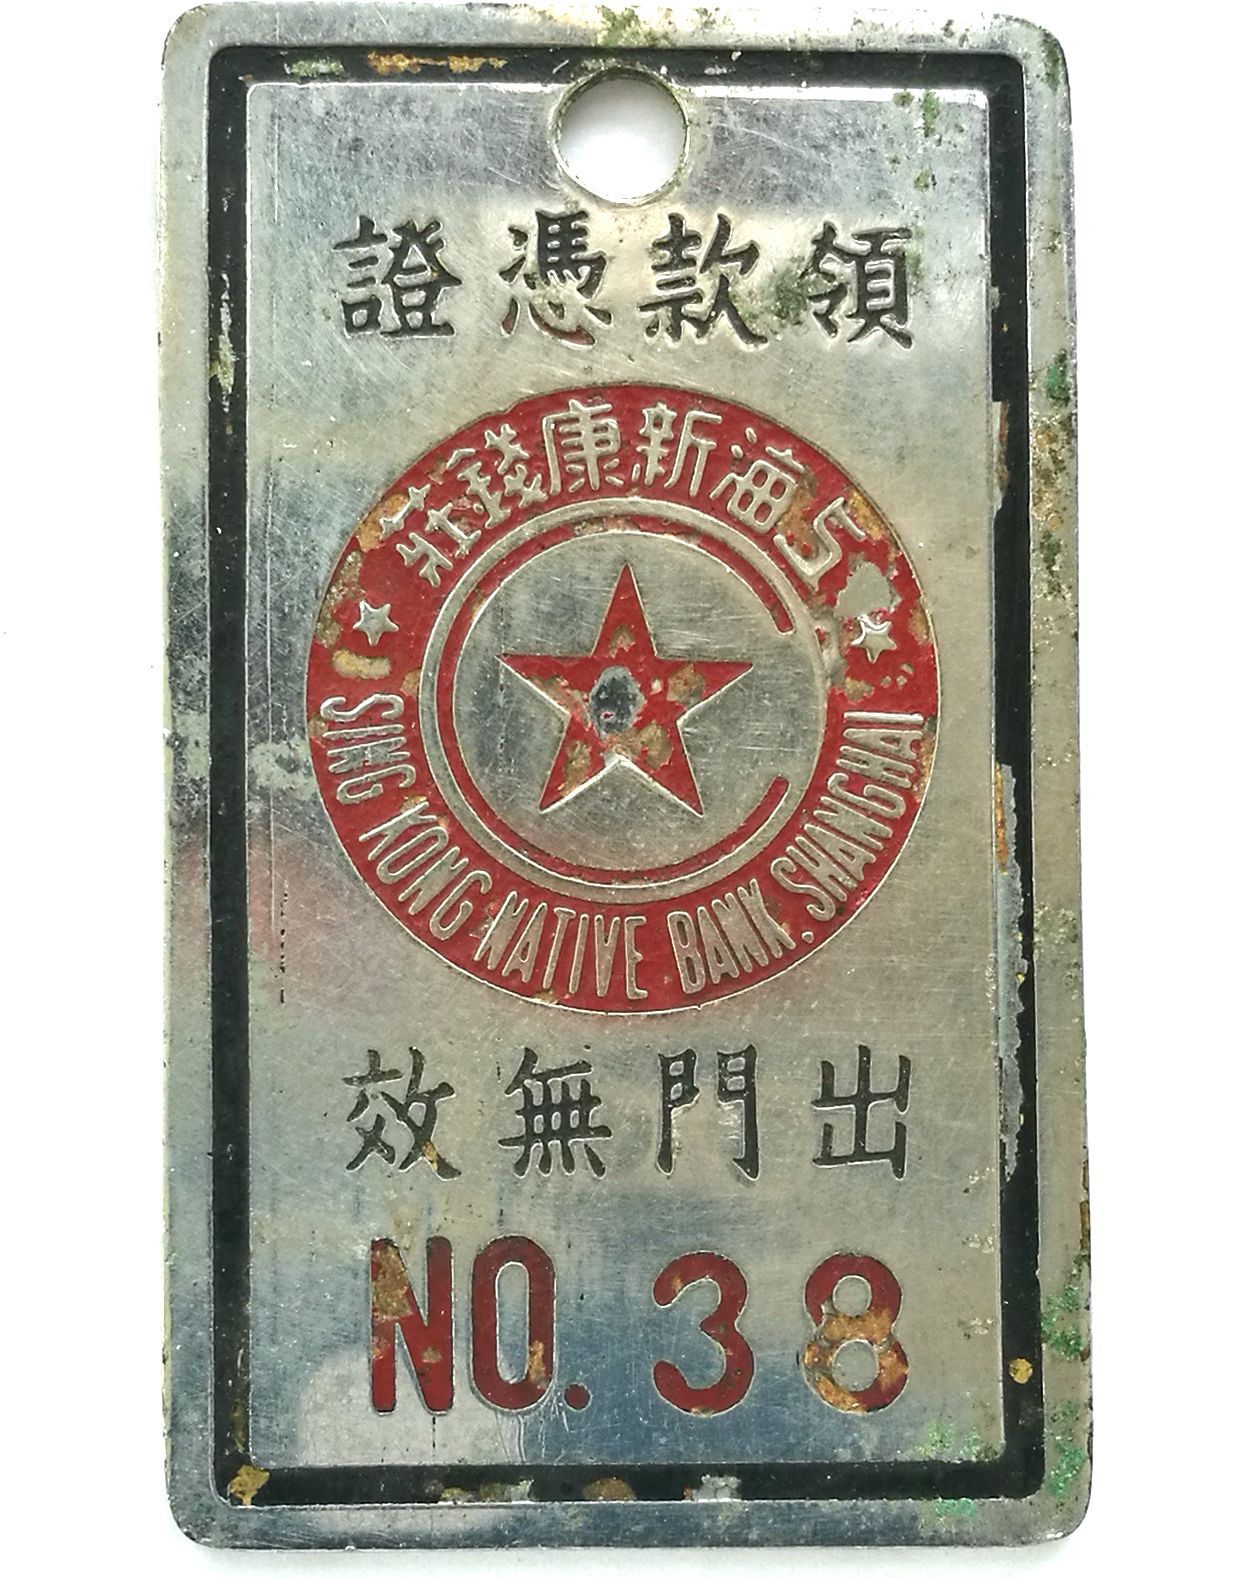 BT038, Shanghai "Sink Kong Native Bank" Token, 1920's RARE!